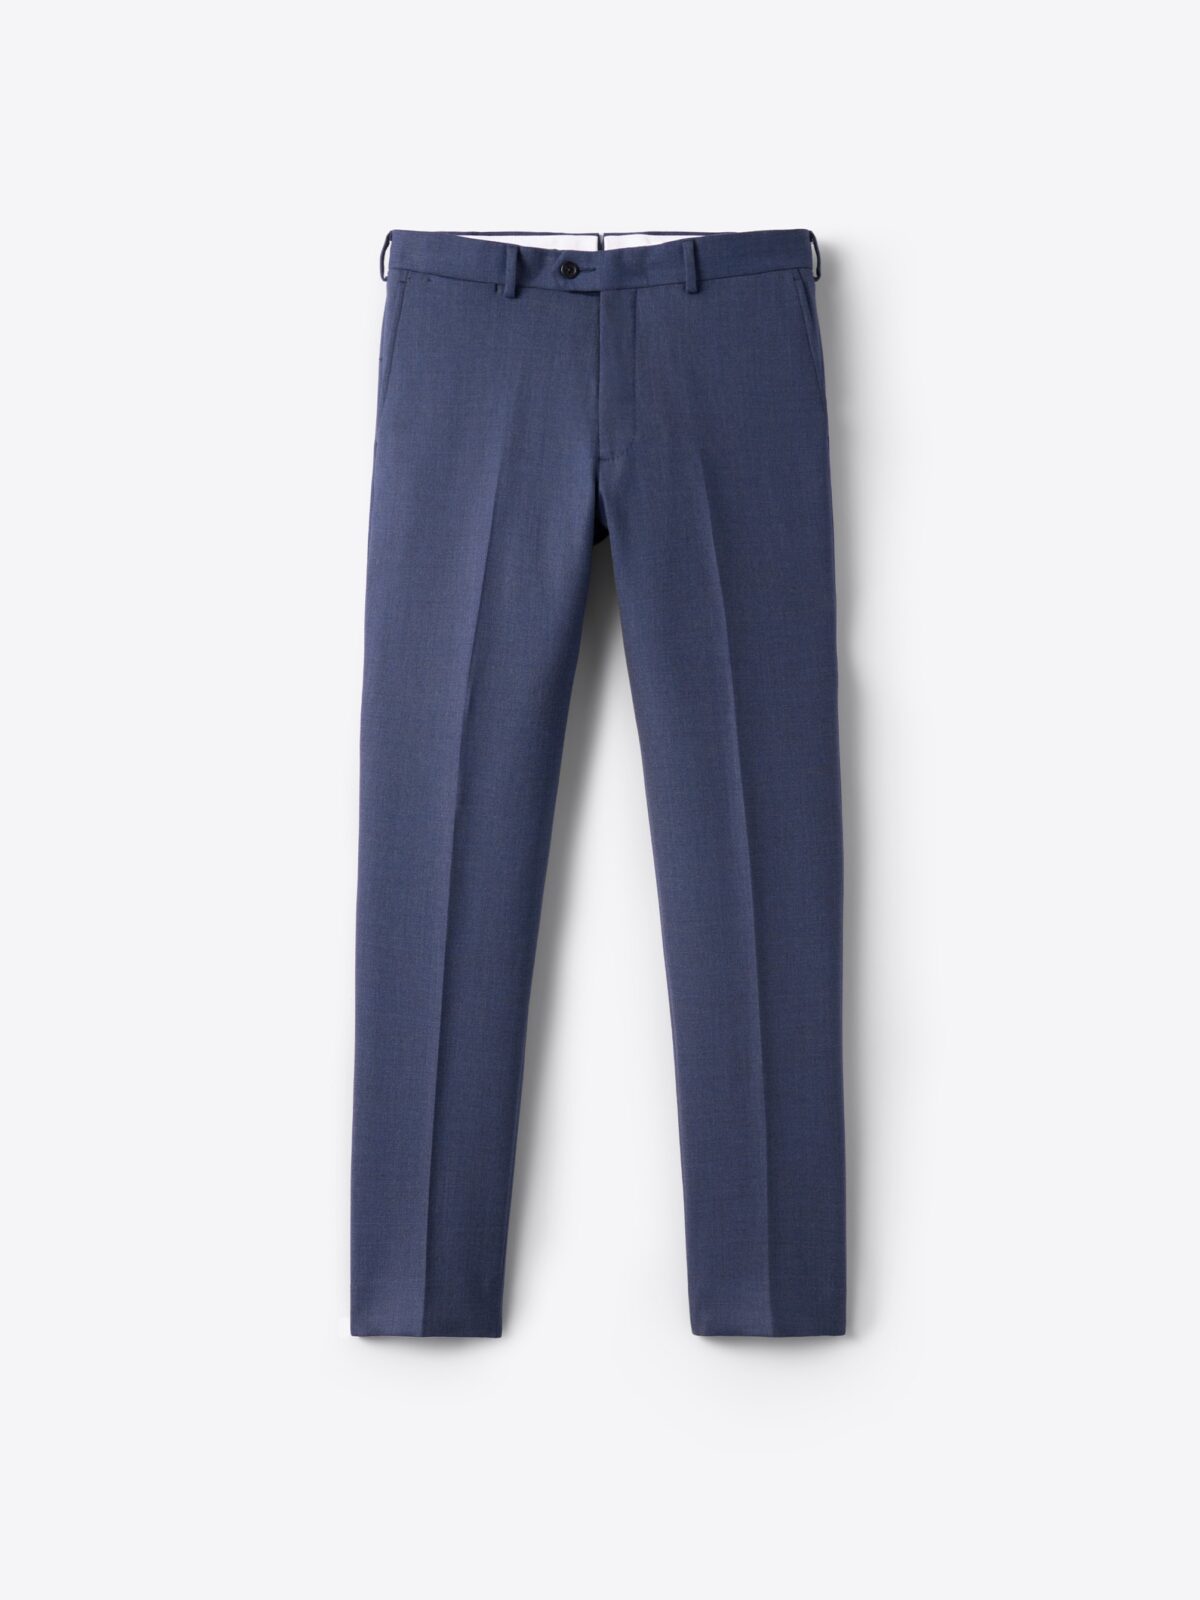 Dries Van Noten Brown Heavy Wool Pants Size 50 fits US 31 - 32 | eBay